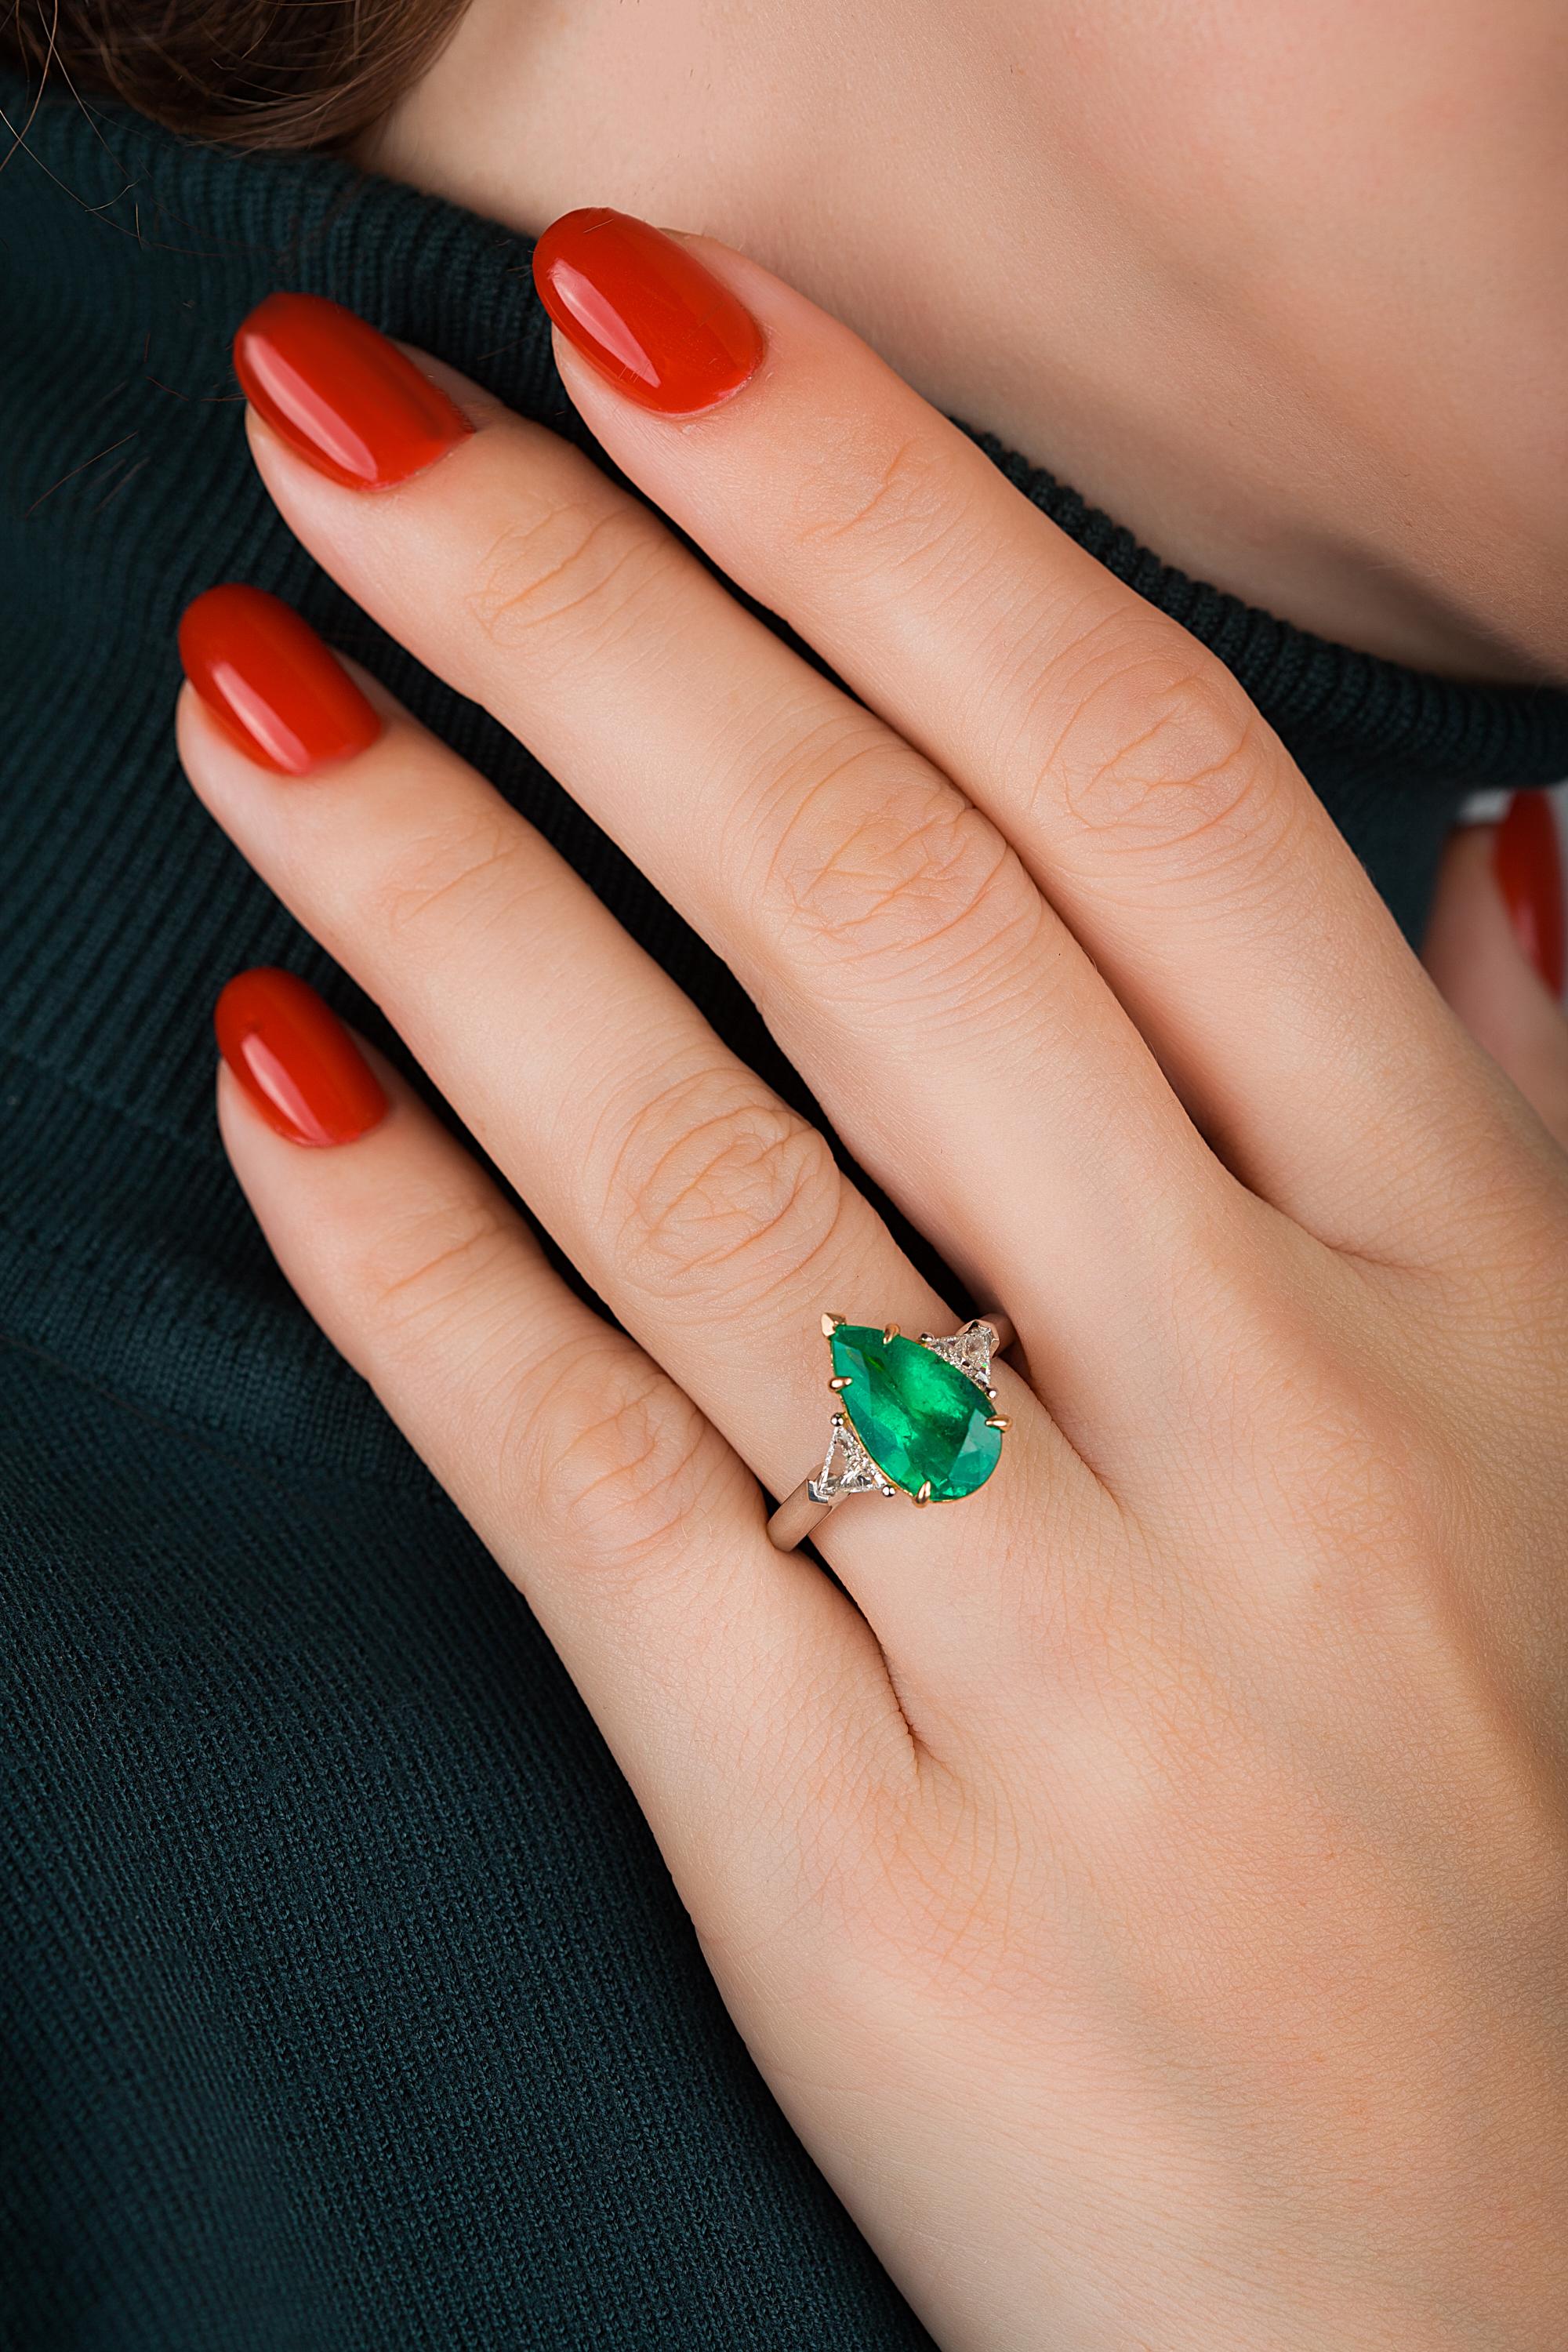 Pear Cut Emilio Jewelry 4.40 Carat Colombian Pear Shape Emerald Diamond Ring For Sale